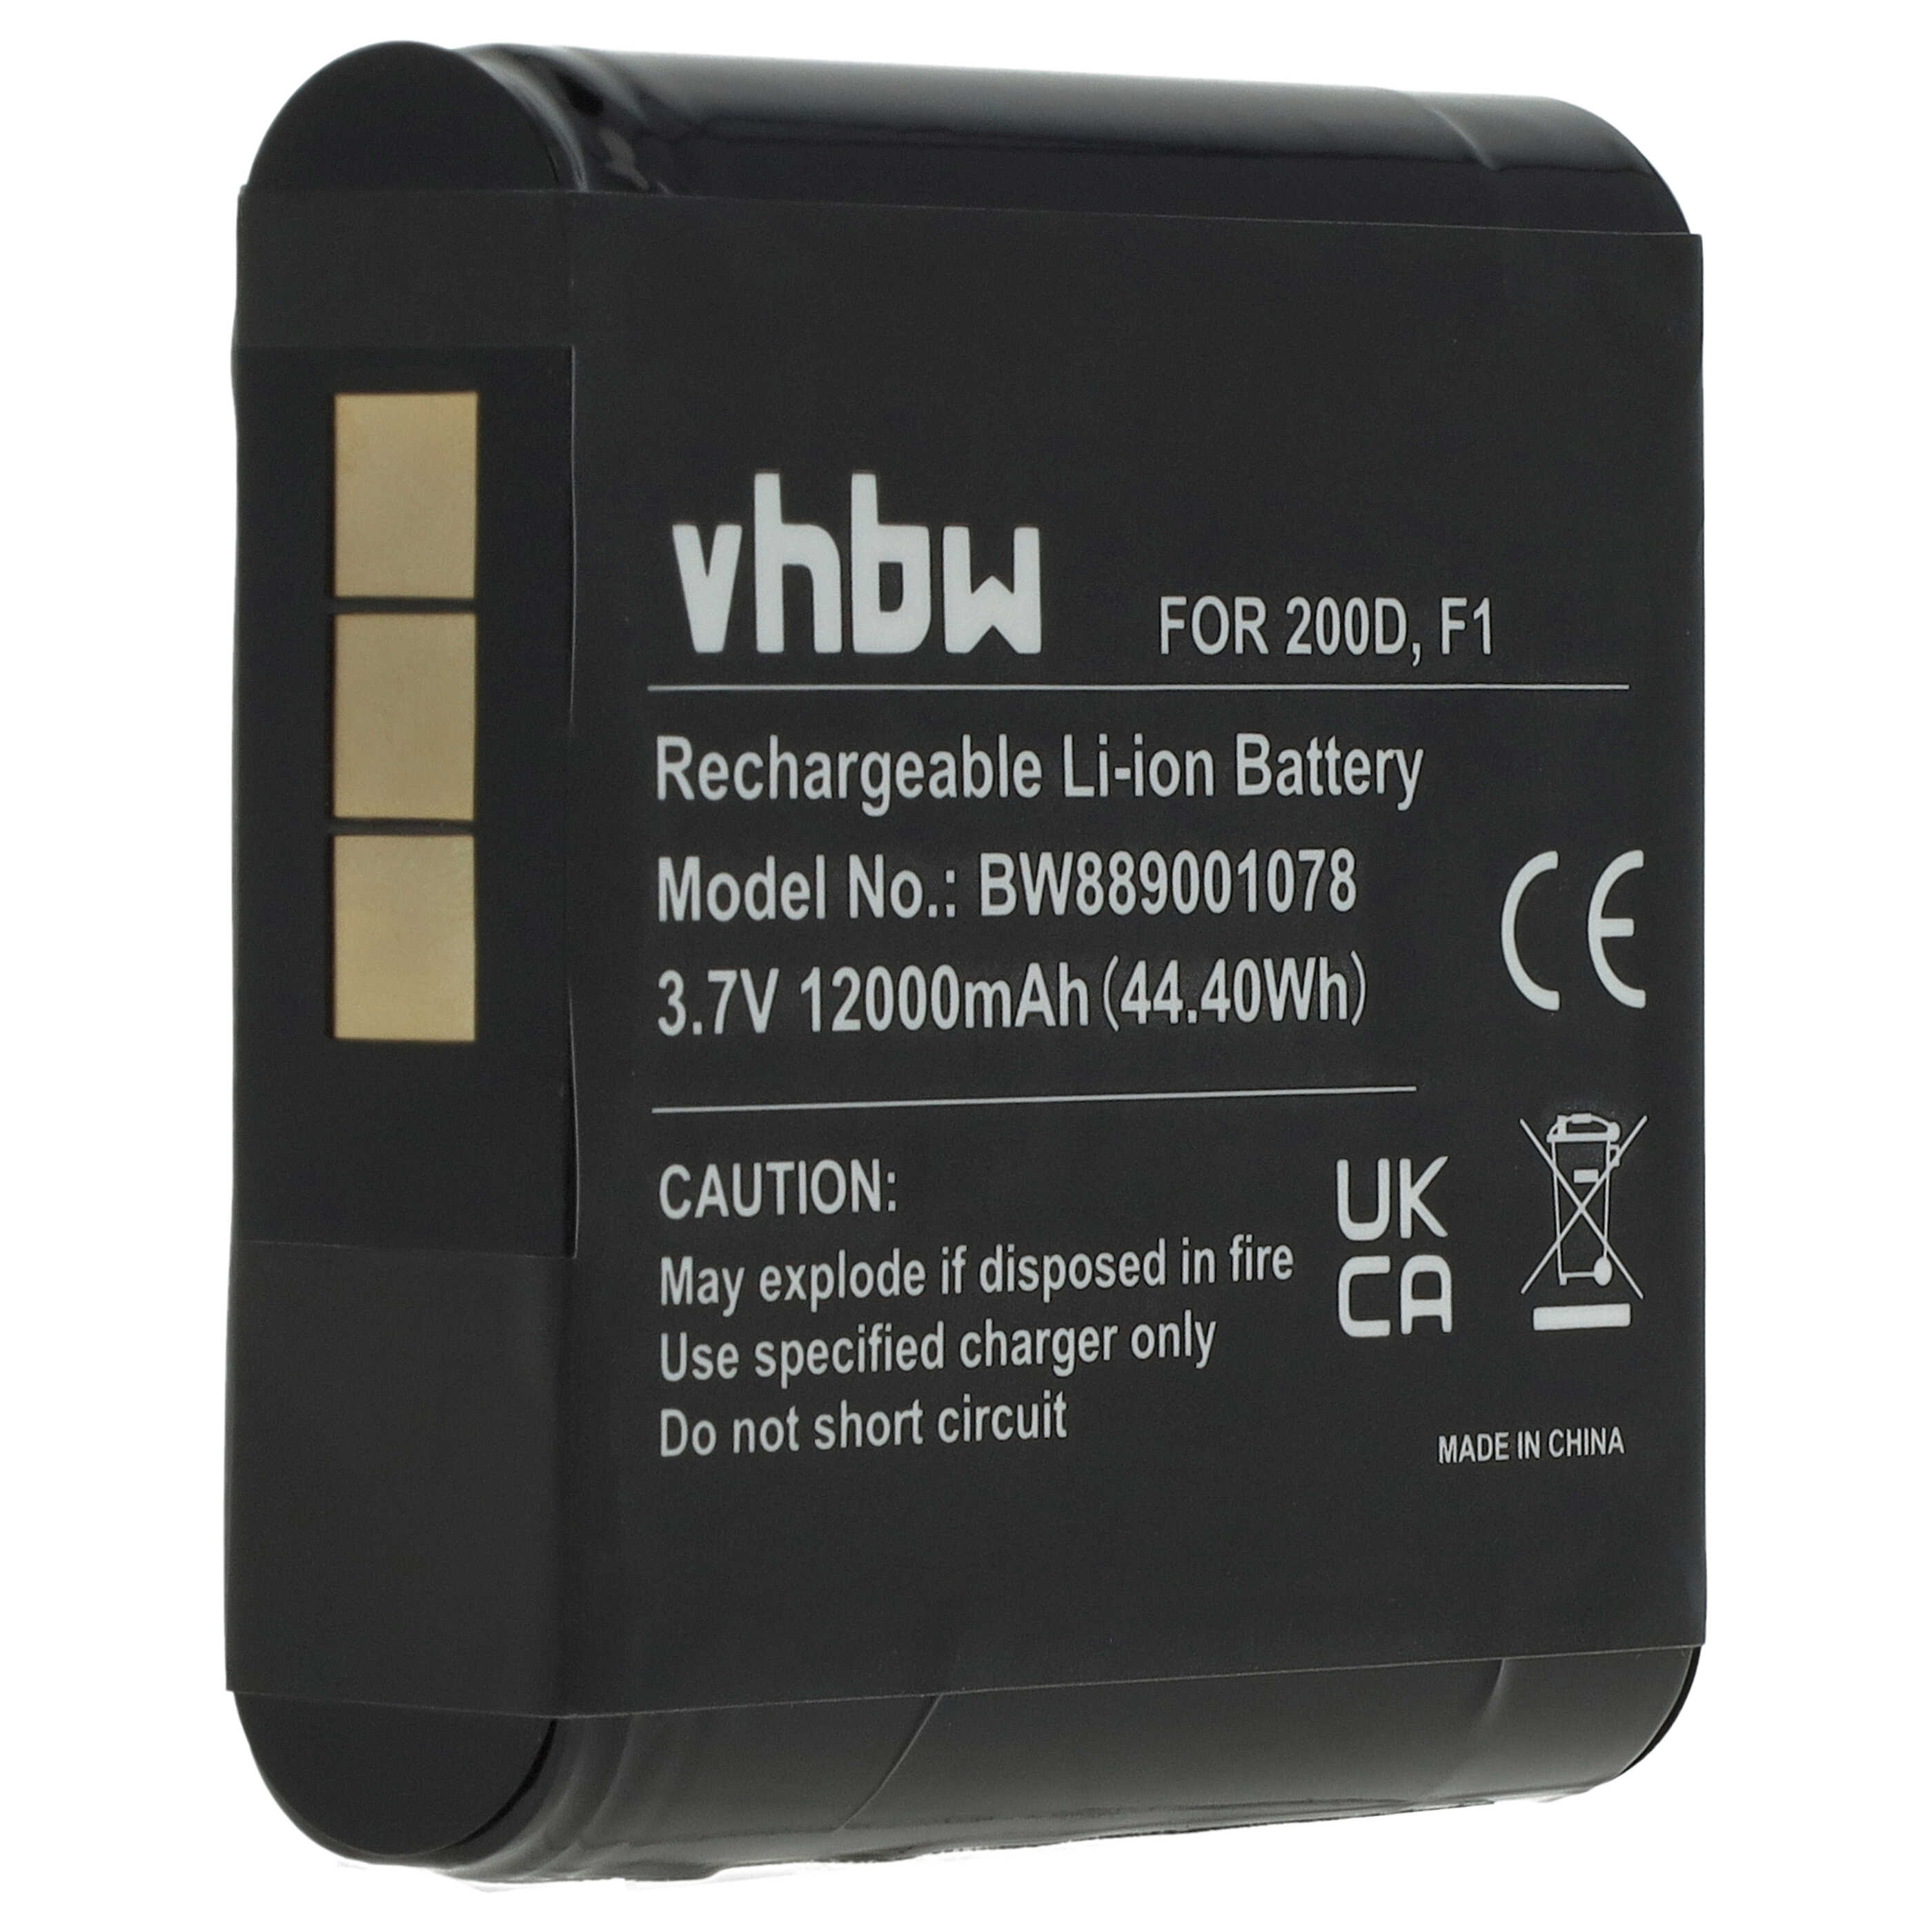 DAB Radio Battery Replacement for Pure ChargePAK F1, F1 - 12000mAh 3.7V Li-Ion